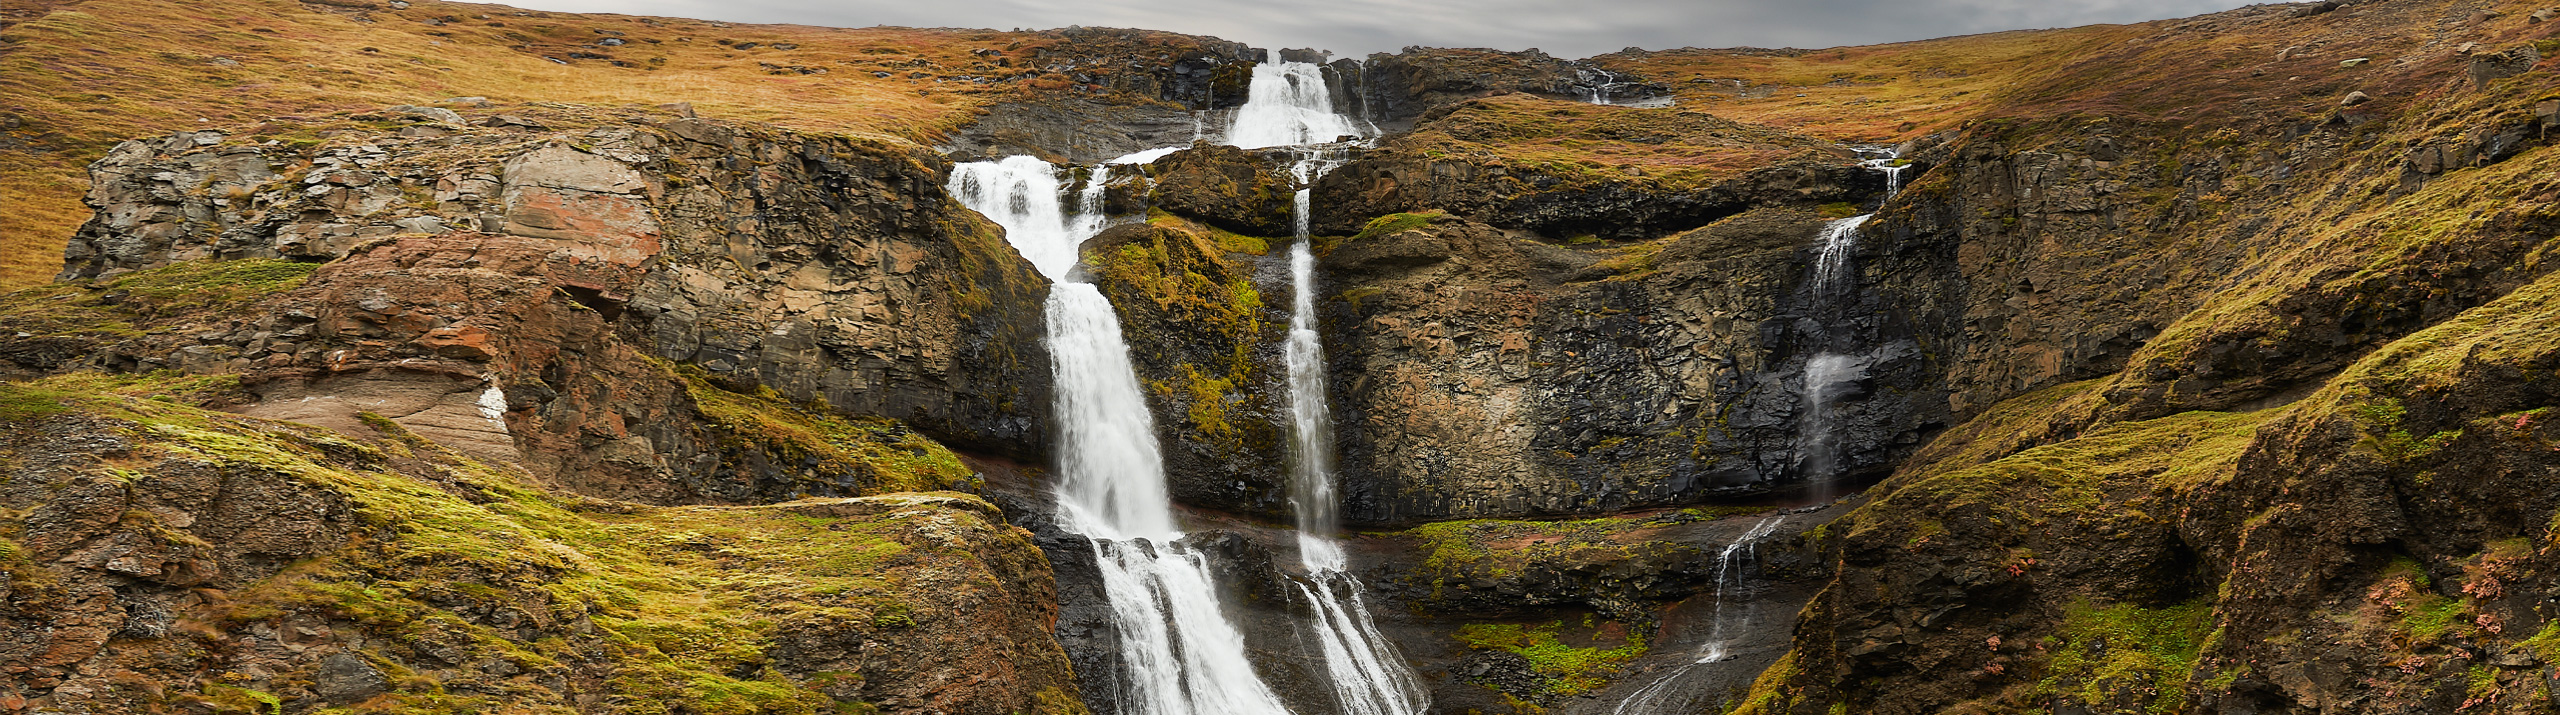 Rjukandi vandfaldet - vandfald i Island